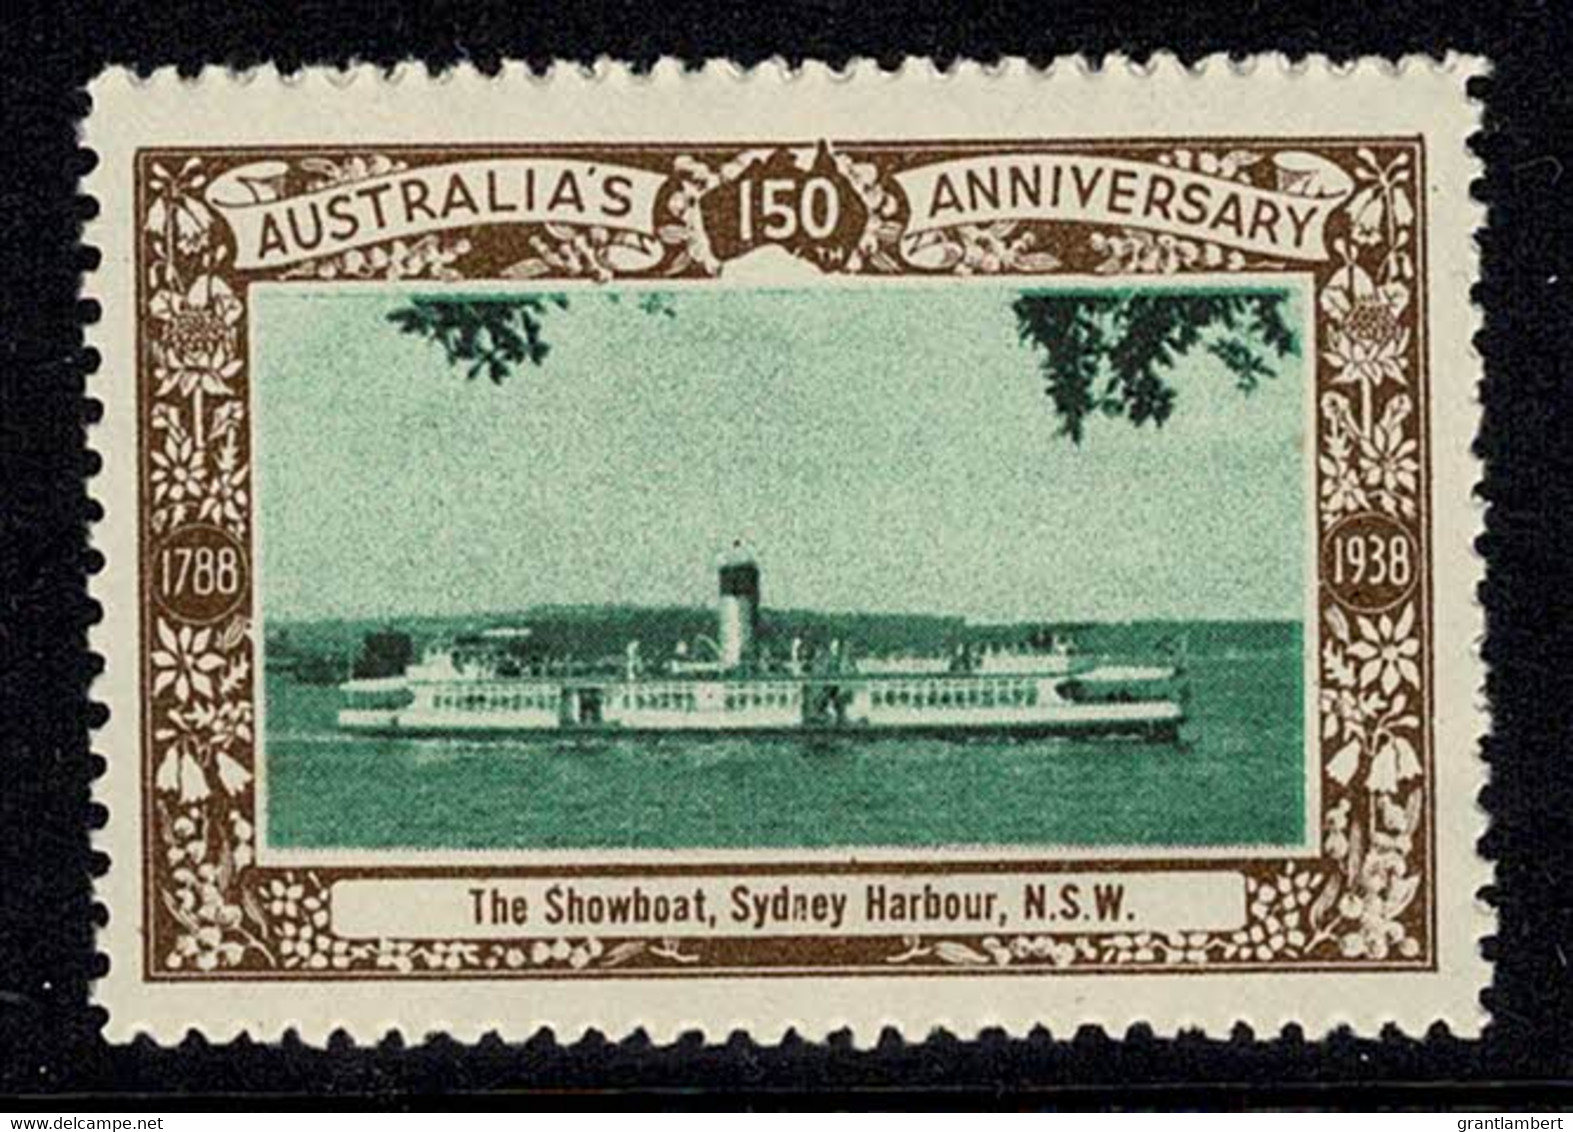 Australia 1938 The Showboat, Sydney Harbour - NSW 150th Anniversary Cinderella MNH - Cinderelas